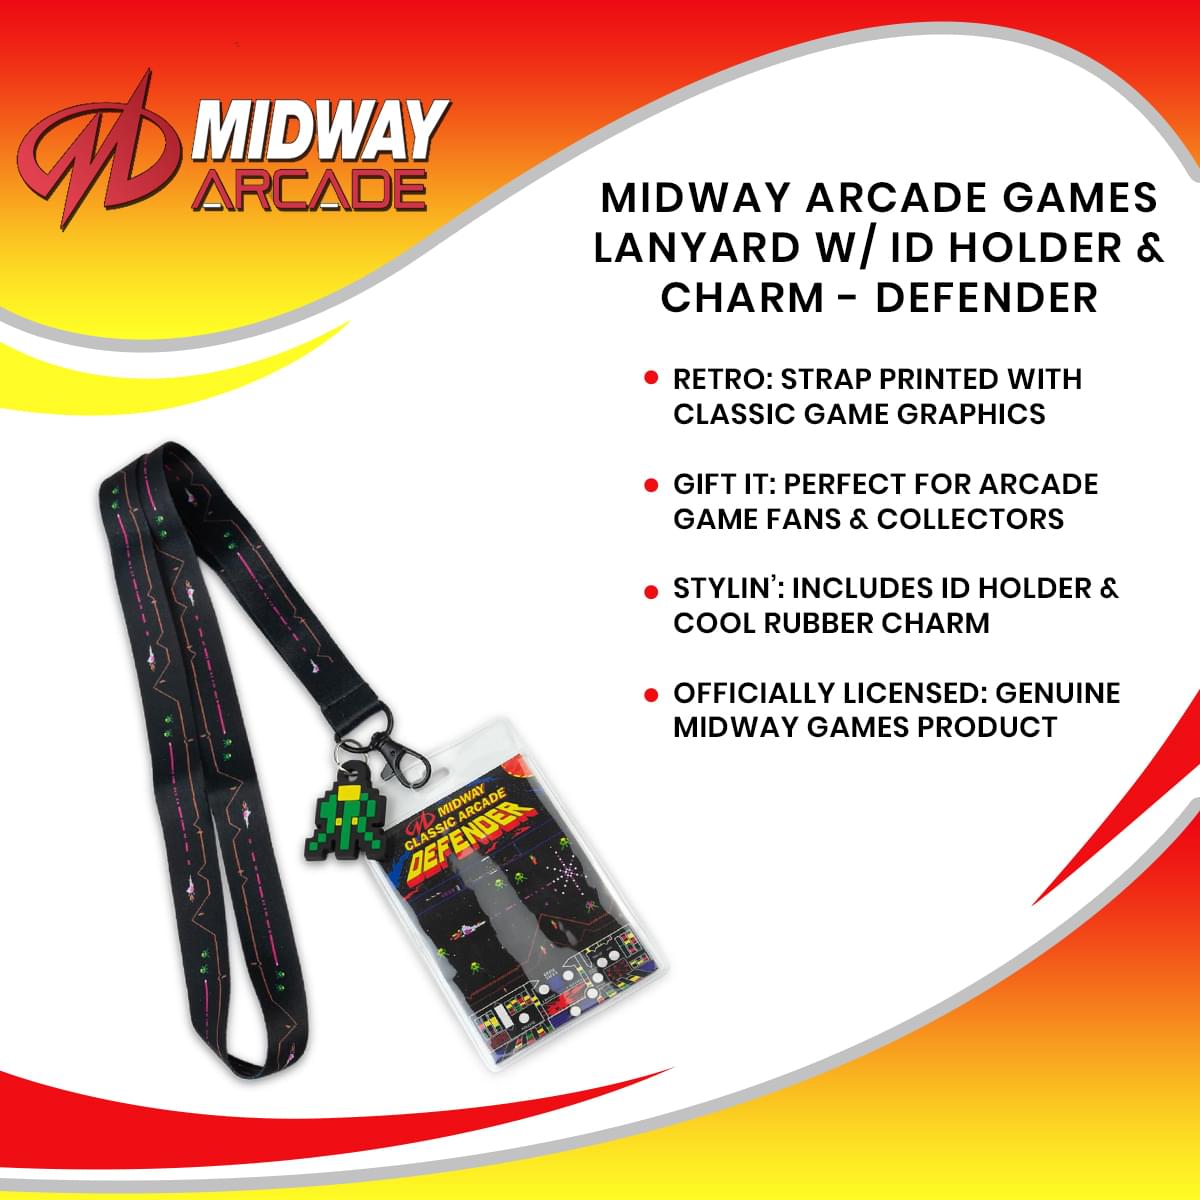 Midway Arcade Games Lanyard w/ ID Holder & Charm - Defender